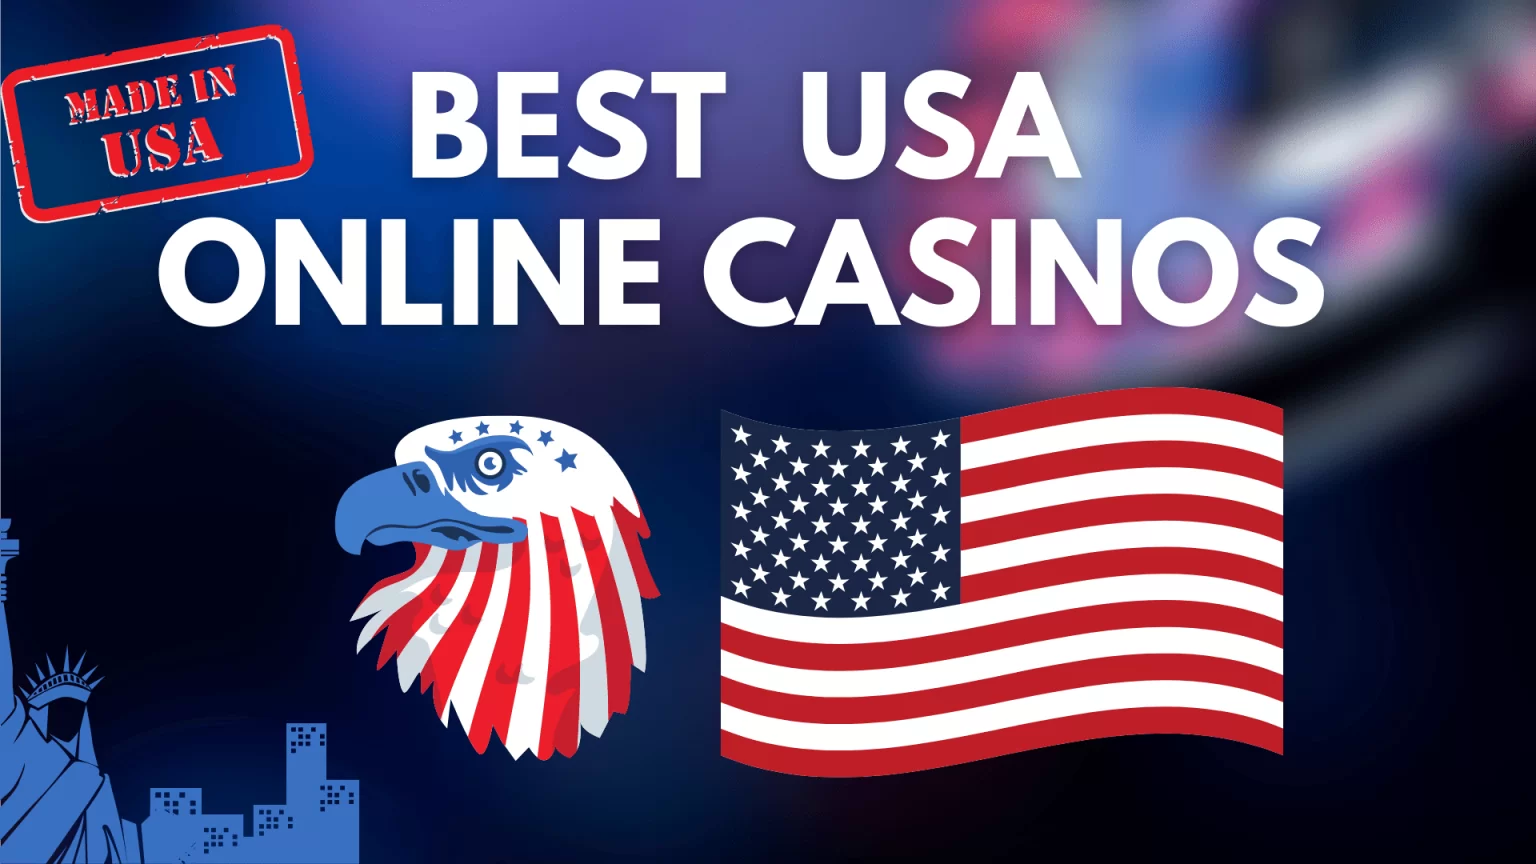 Us Online Casino Real Money